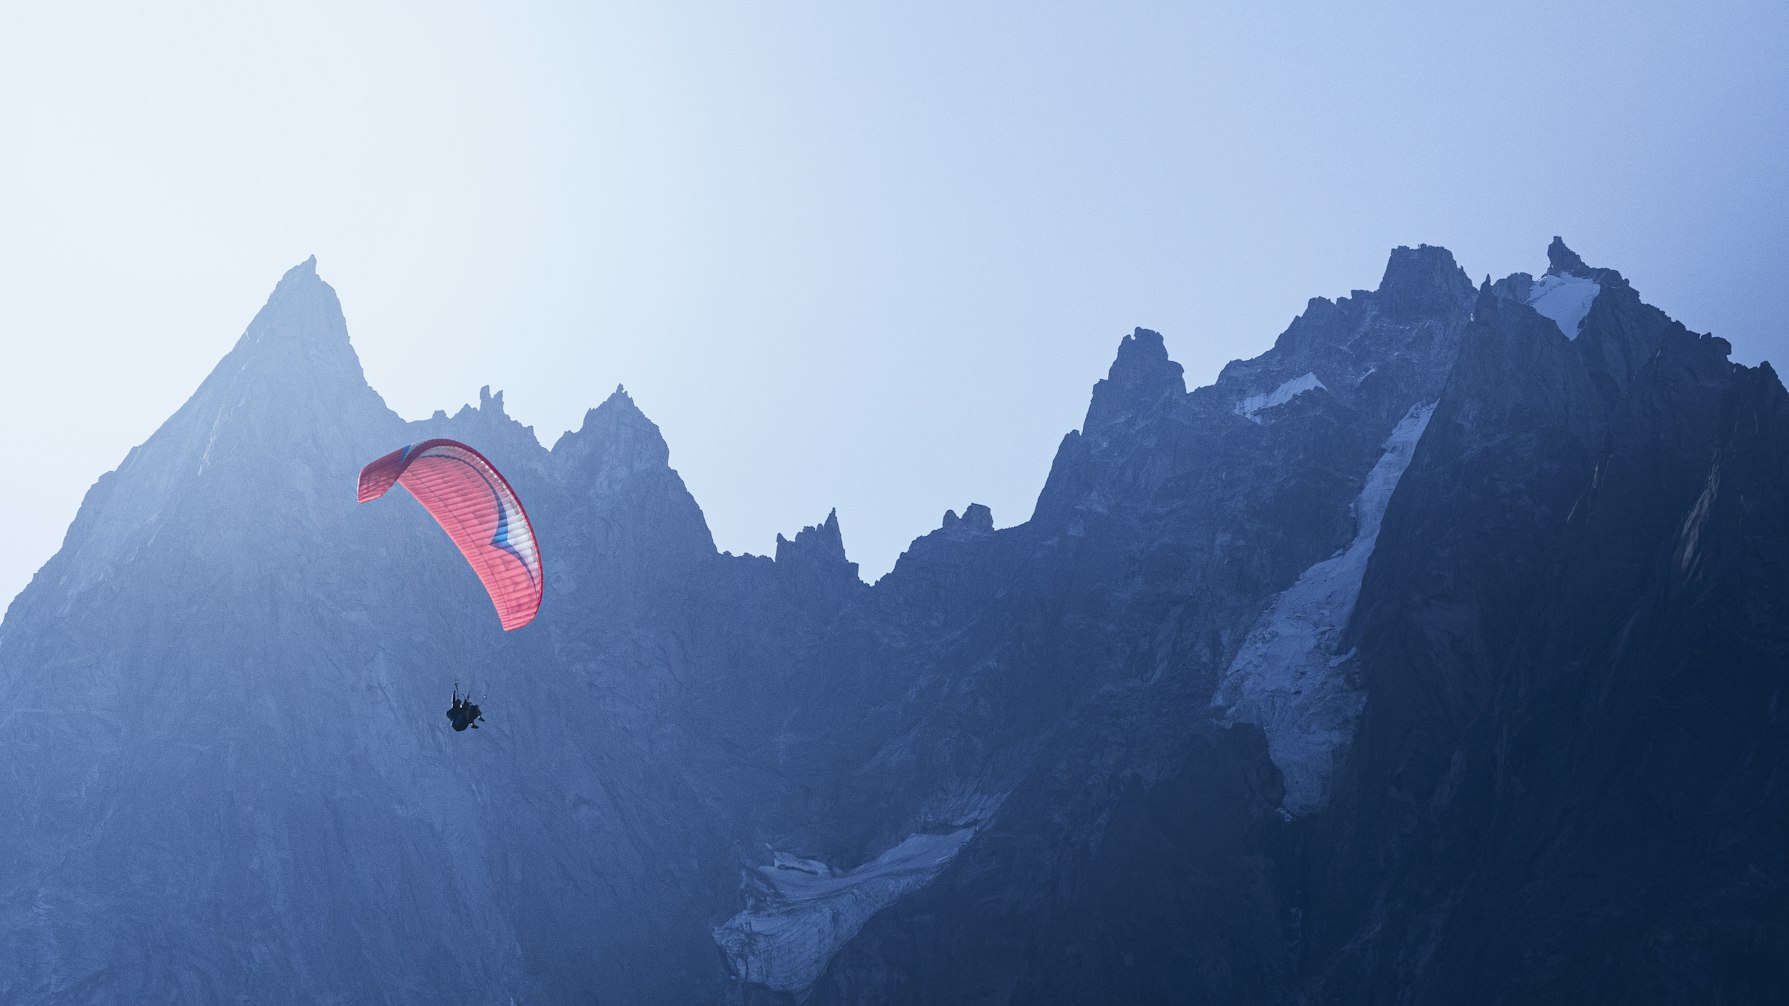 Man parachuting in the mountains